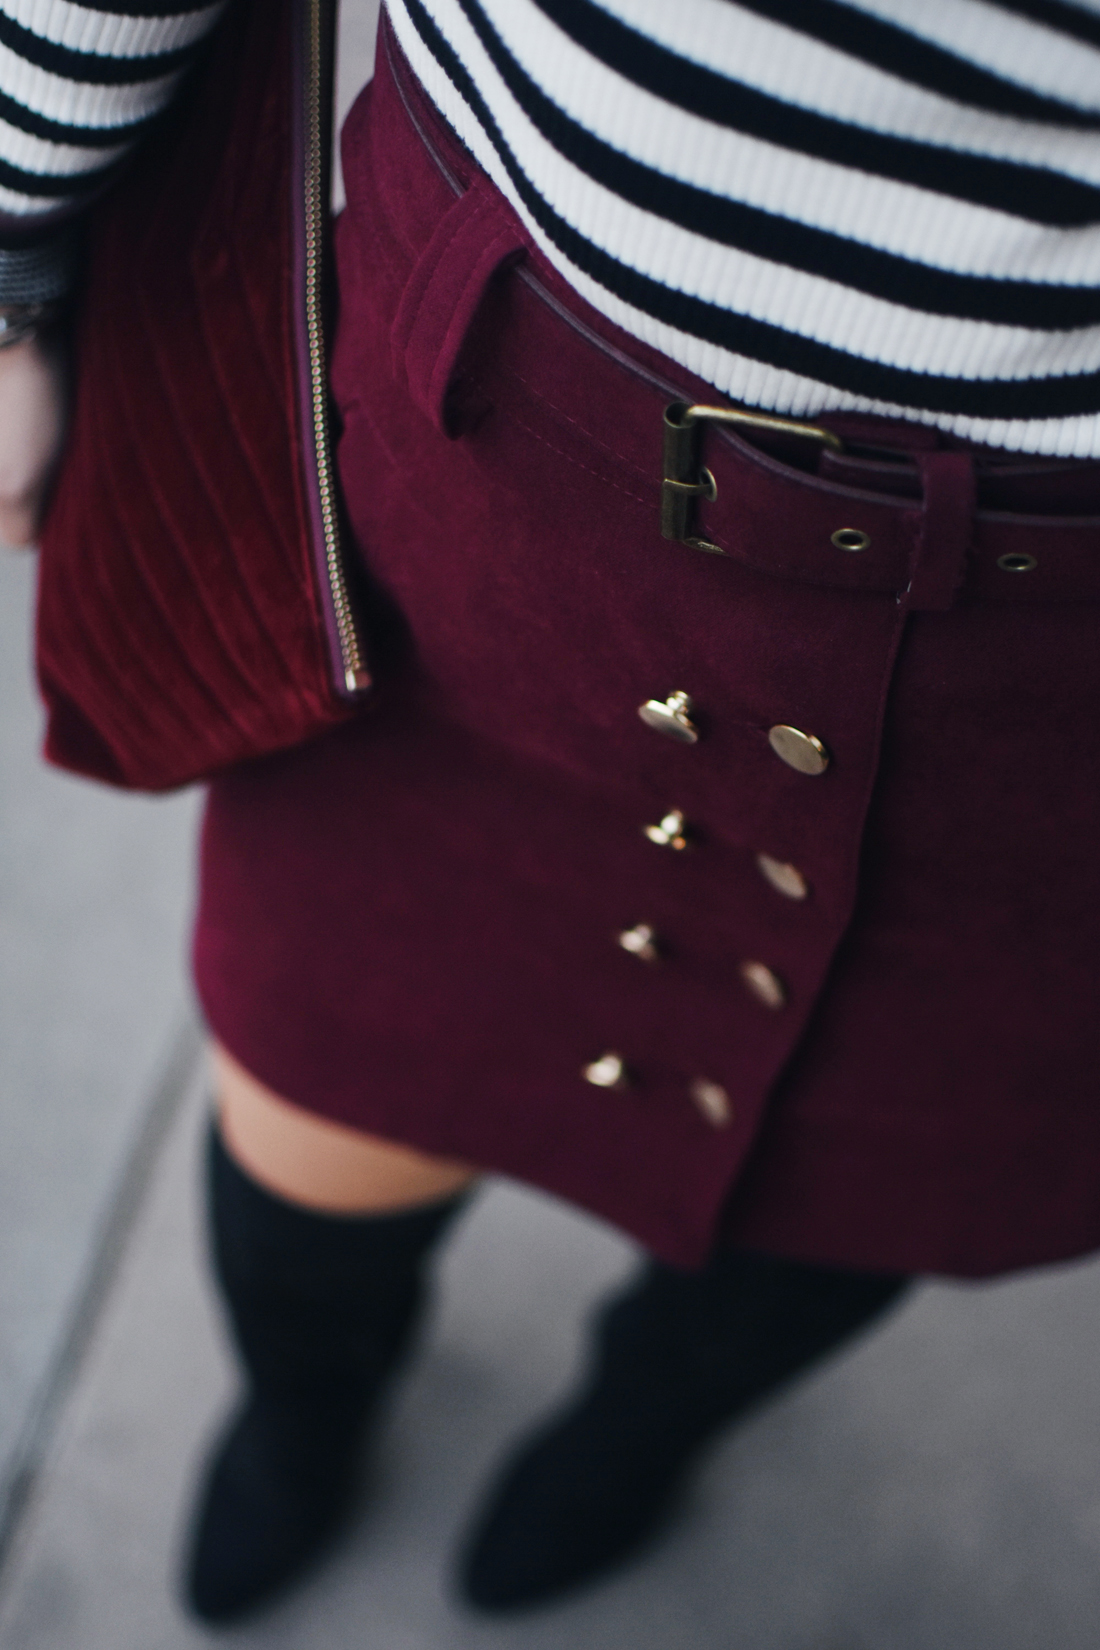 Carolina Hellal of Chic Talk wearing a SheIn burgundy mini skirt, Gap ribbed turtleneck sweater and black boots